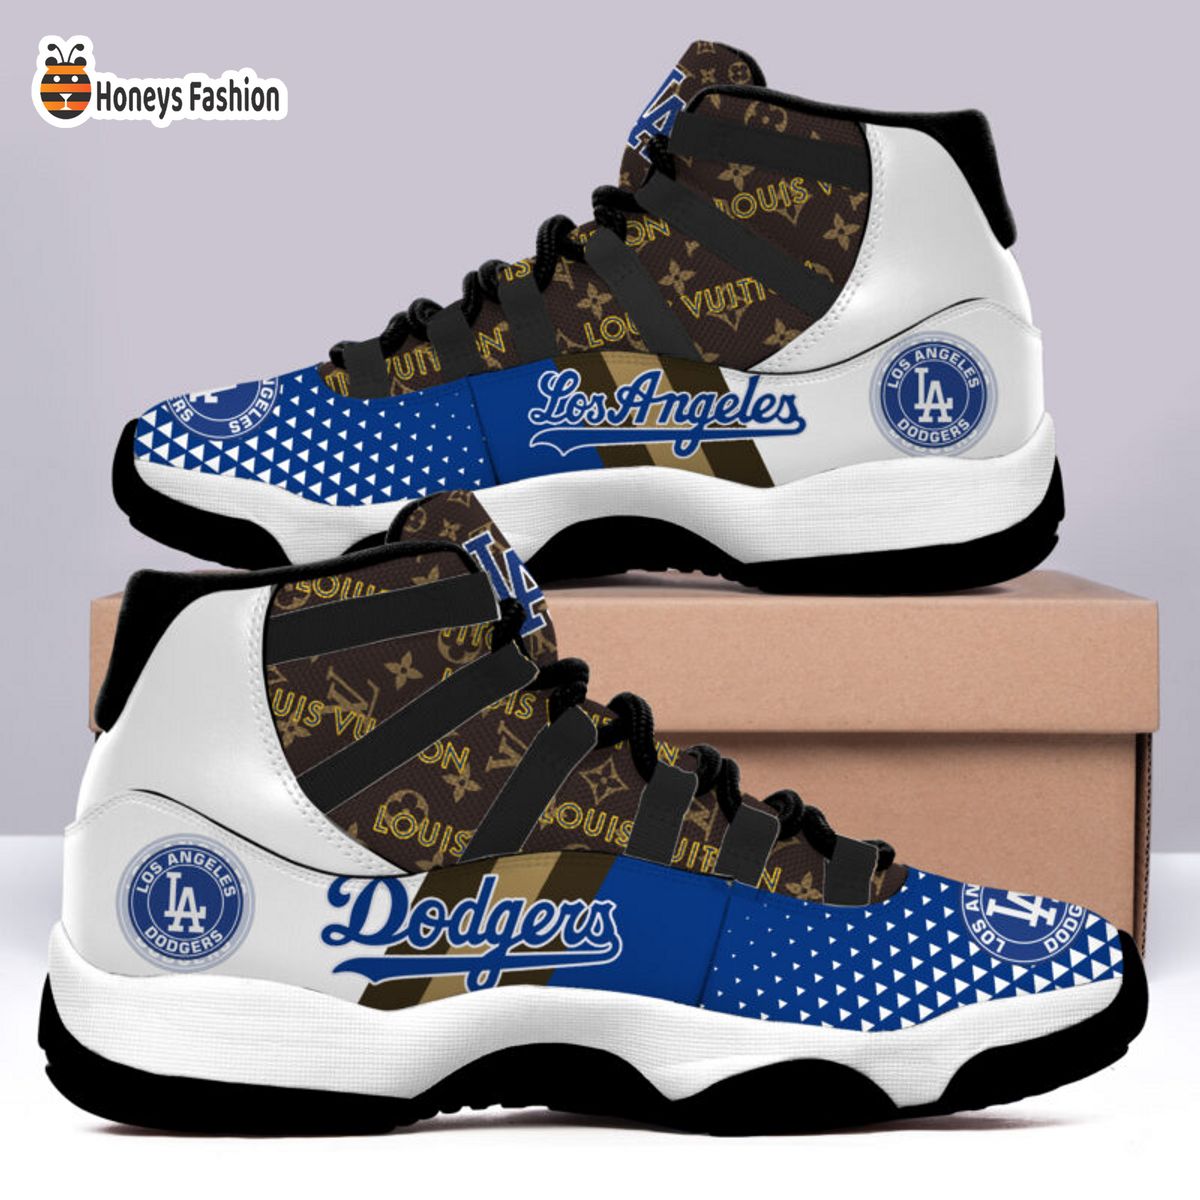 Los Angeles Dodgers x Louis Vuitton Air Jordan 11 Sneaker